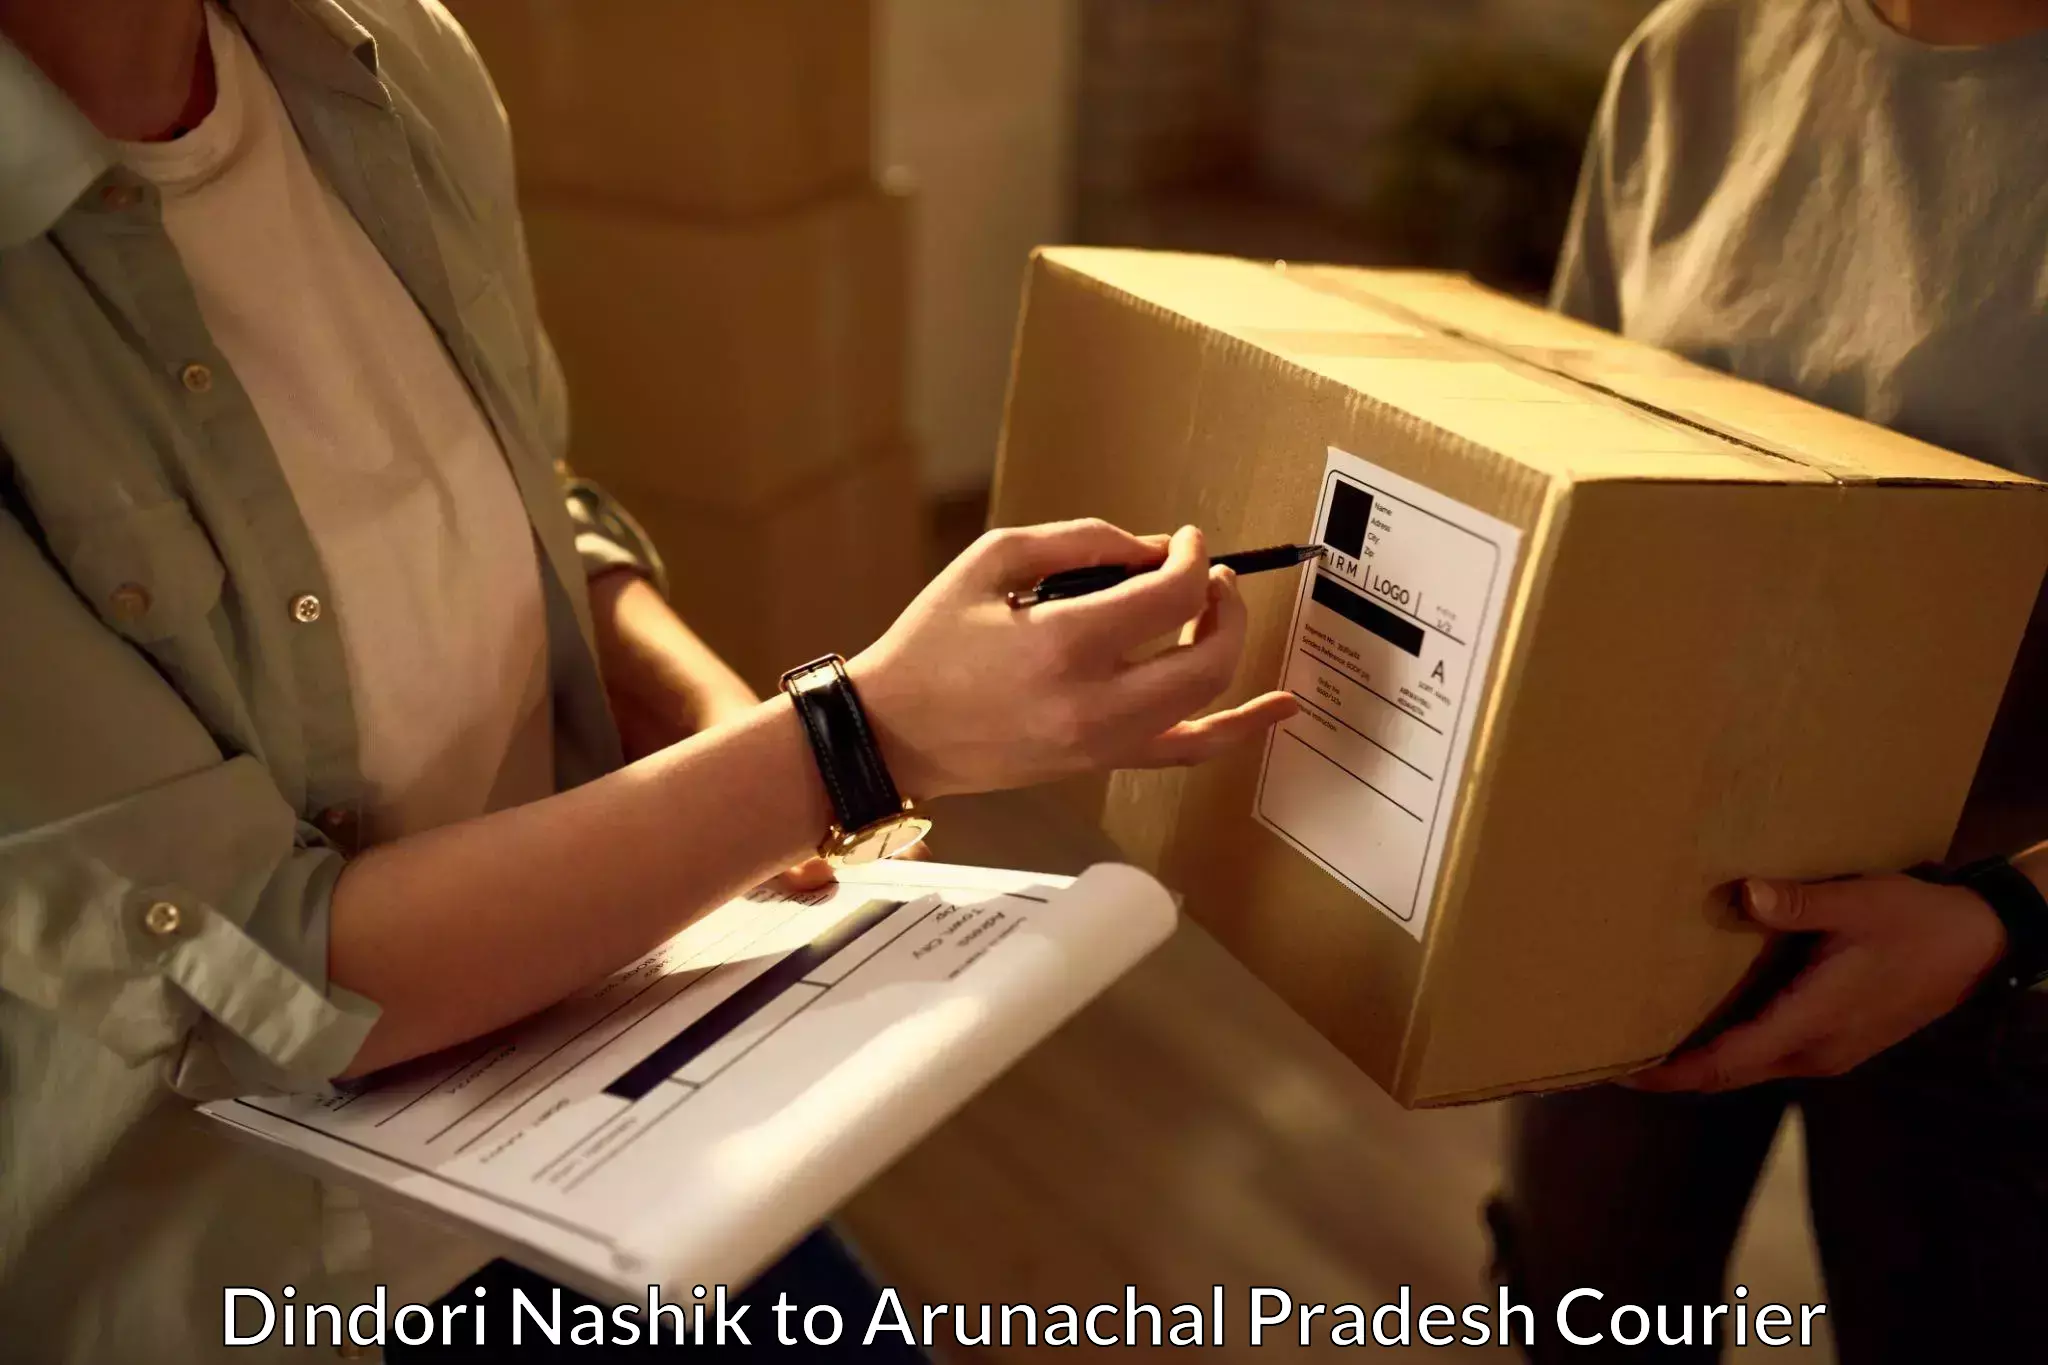 State-of-the-art courier technology Dindori Nashik to Arunachal Pradesh